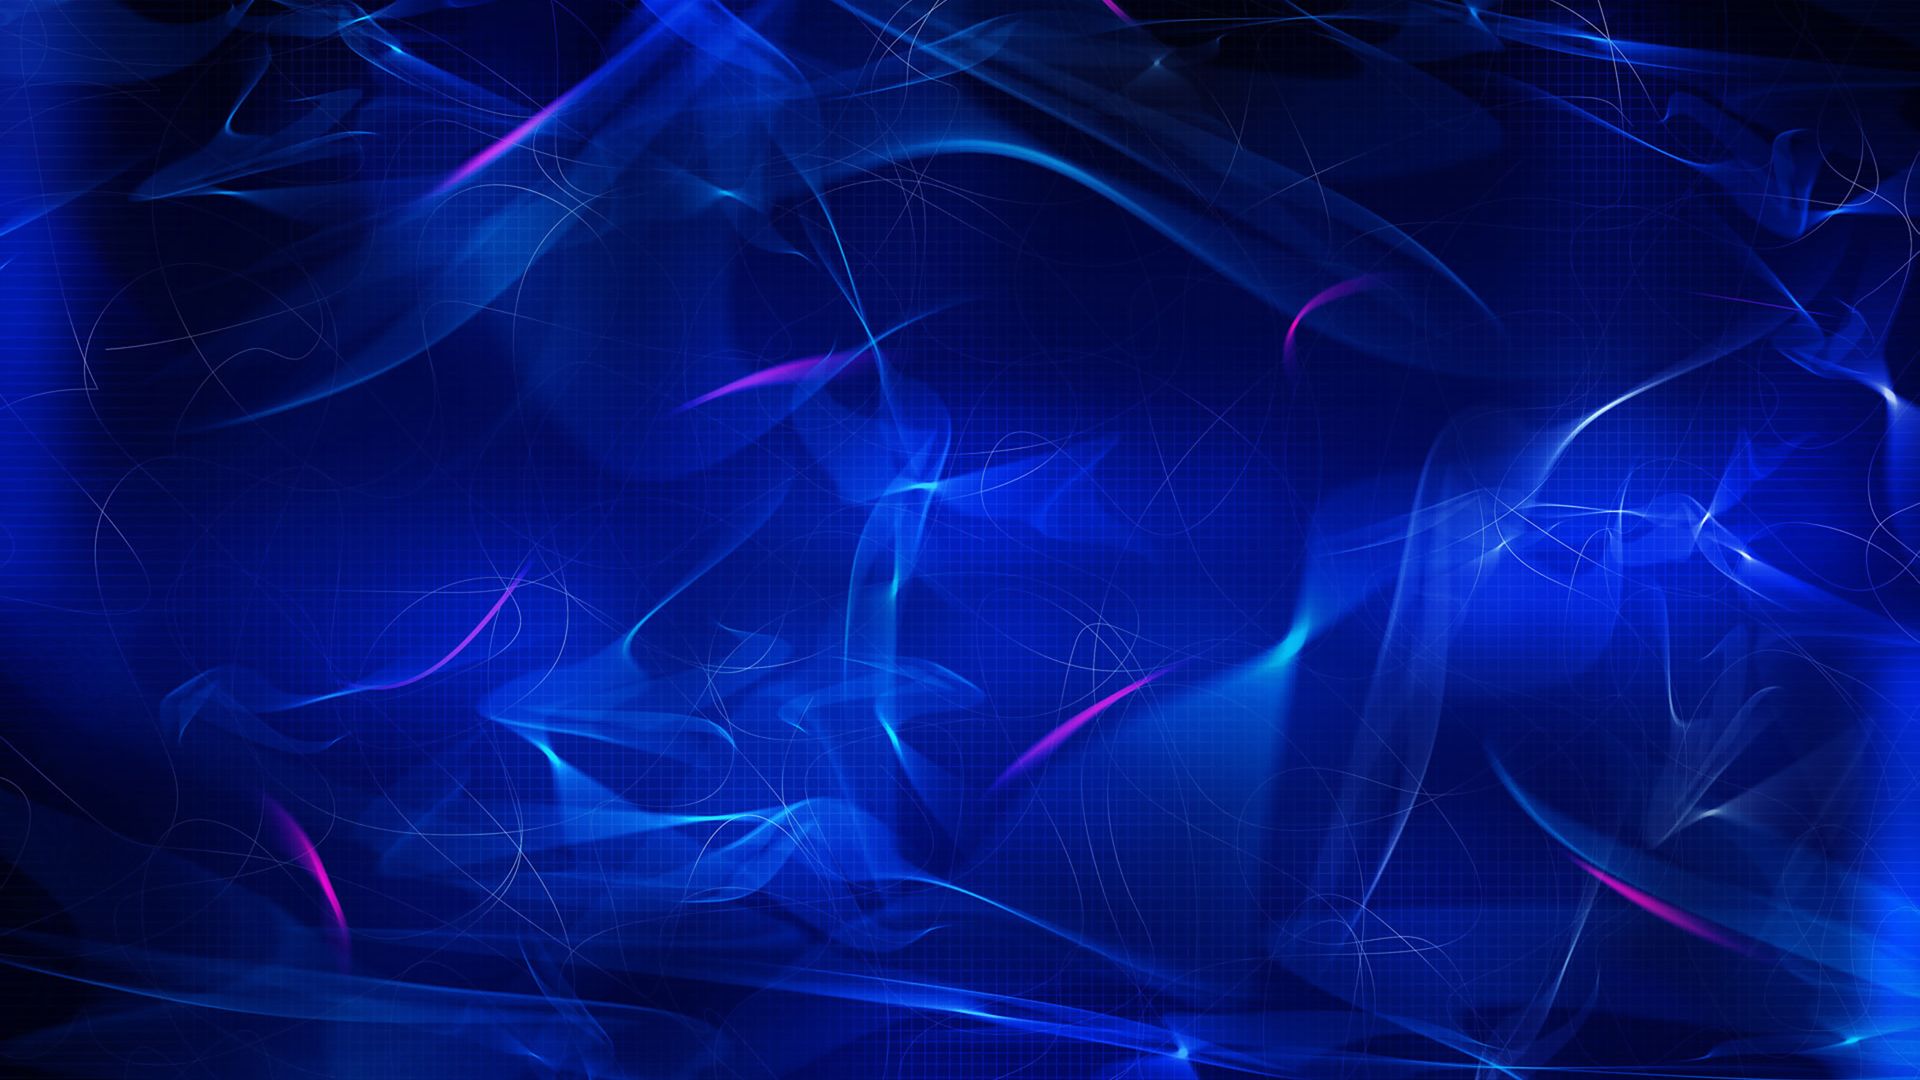 Cool Blue Wallpaper Picture For Desktop X Px